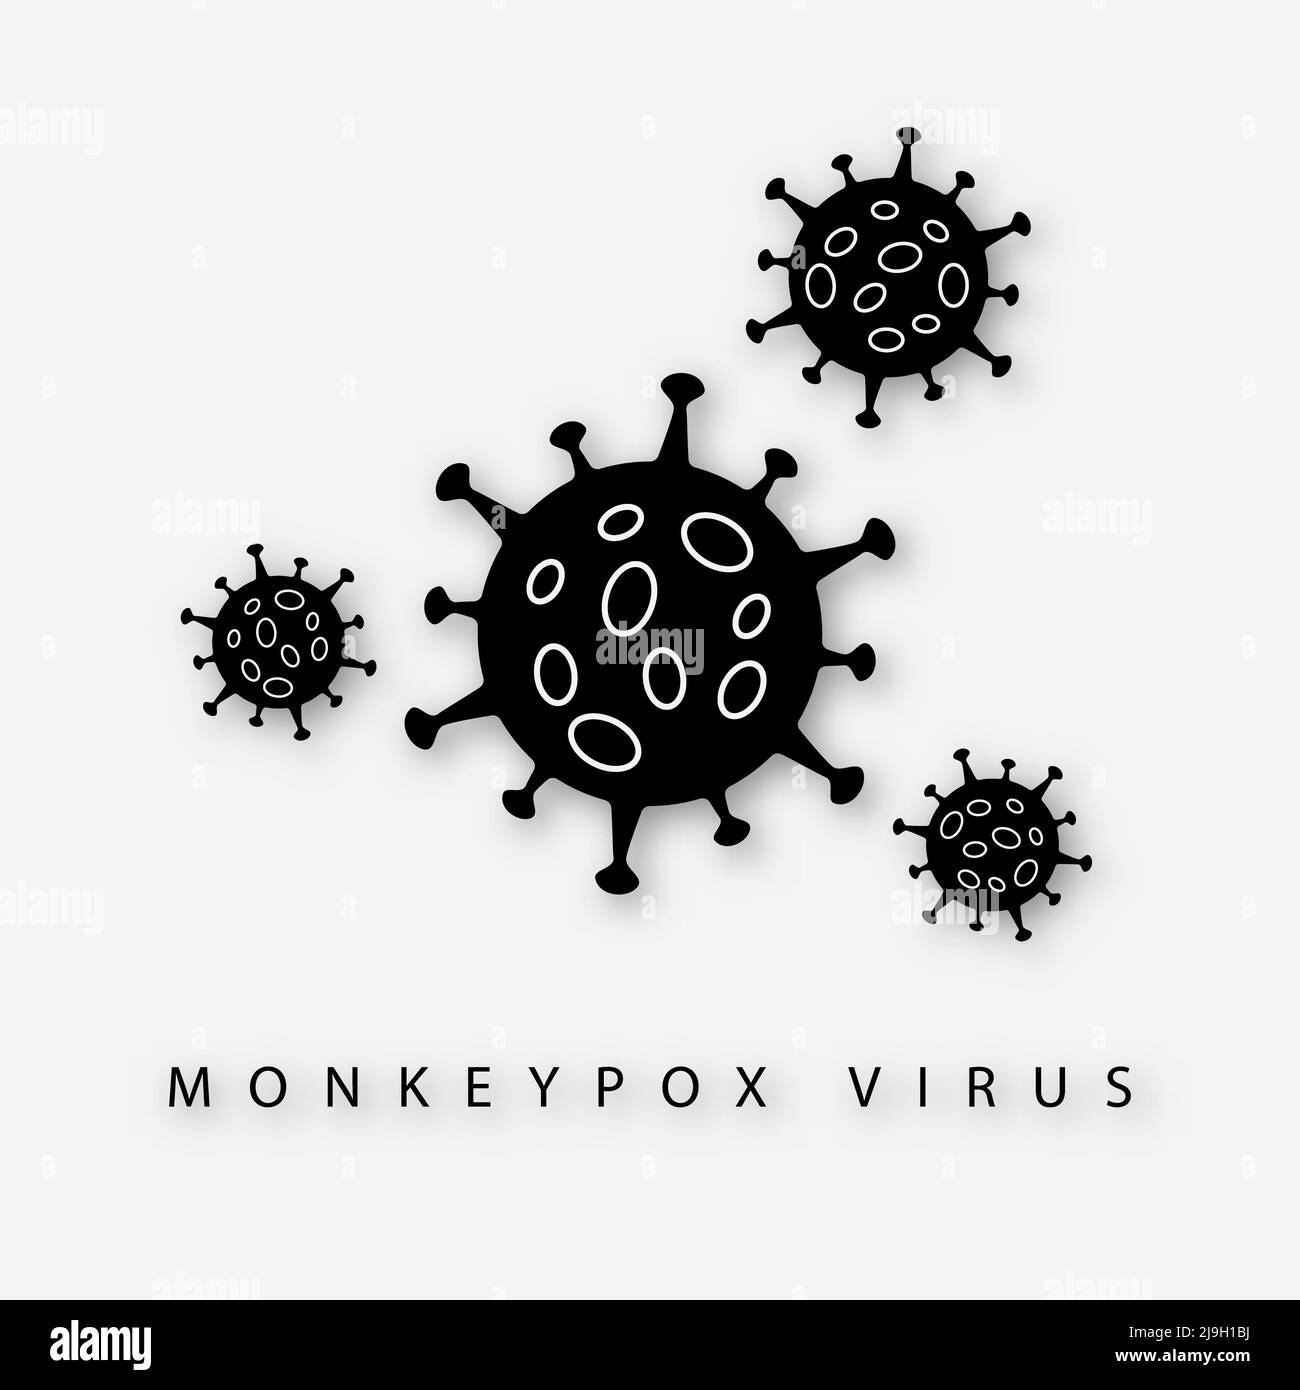 Black virus icon sign monkeypox with shadow. Pox virus concept.  clipart illustration Stock Photo